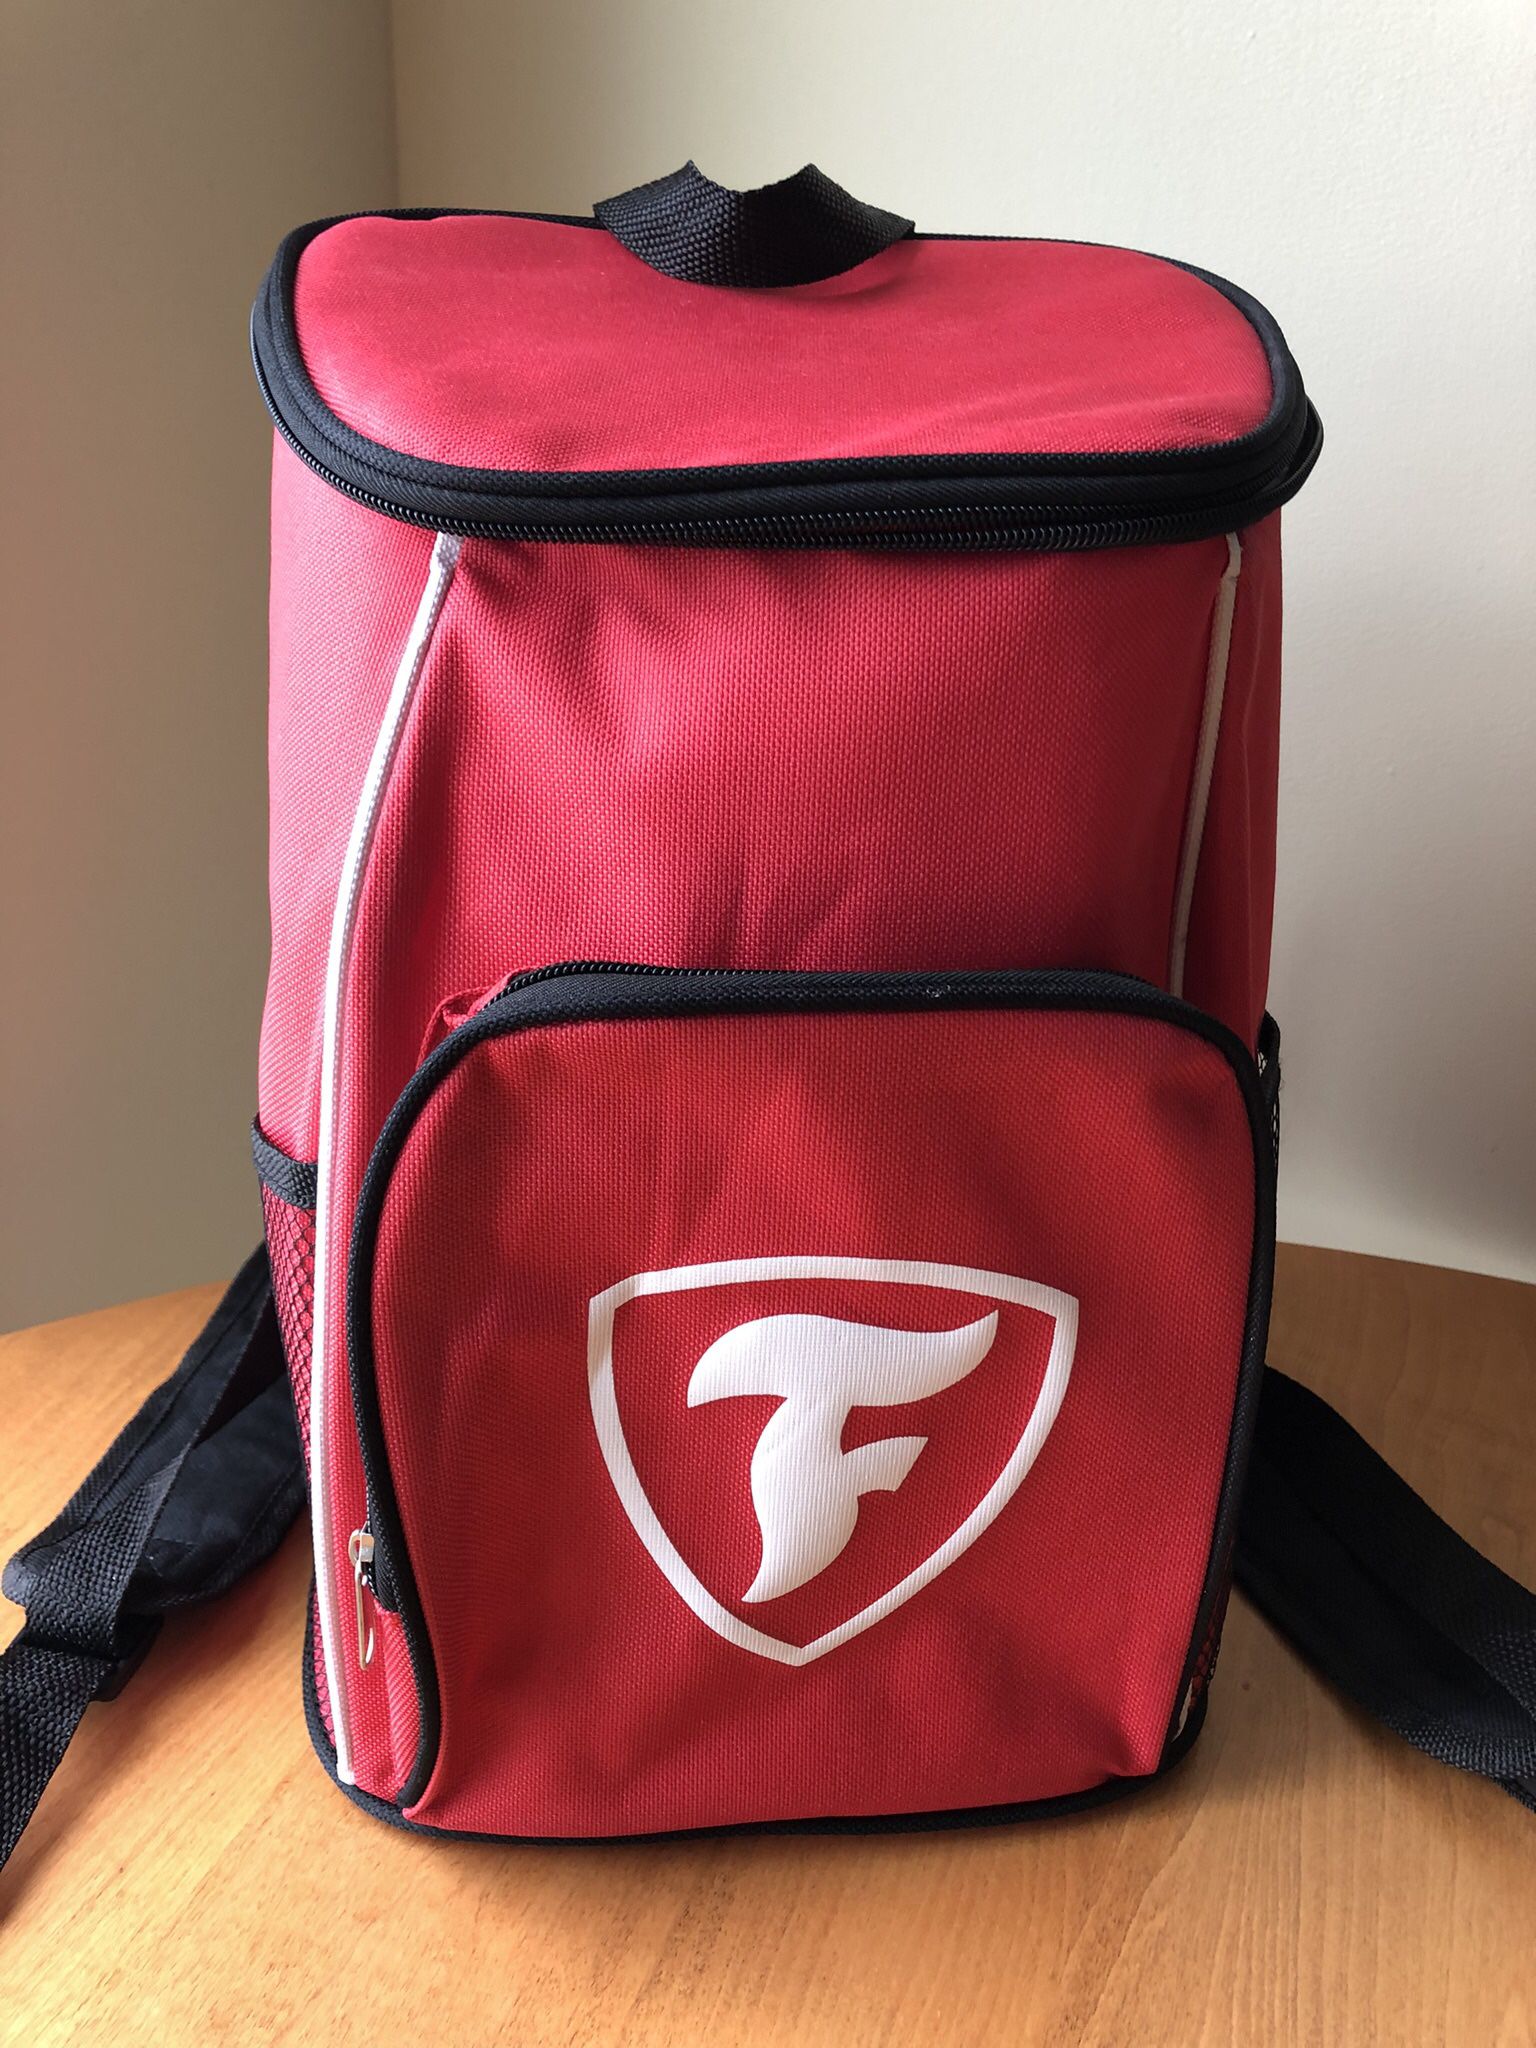 New - Firestone Backpack Cooler 1